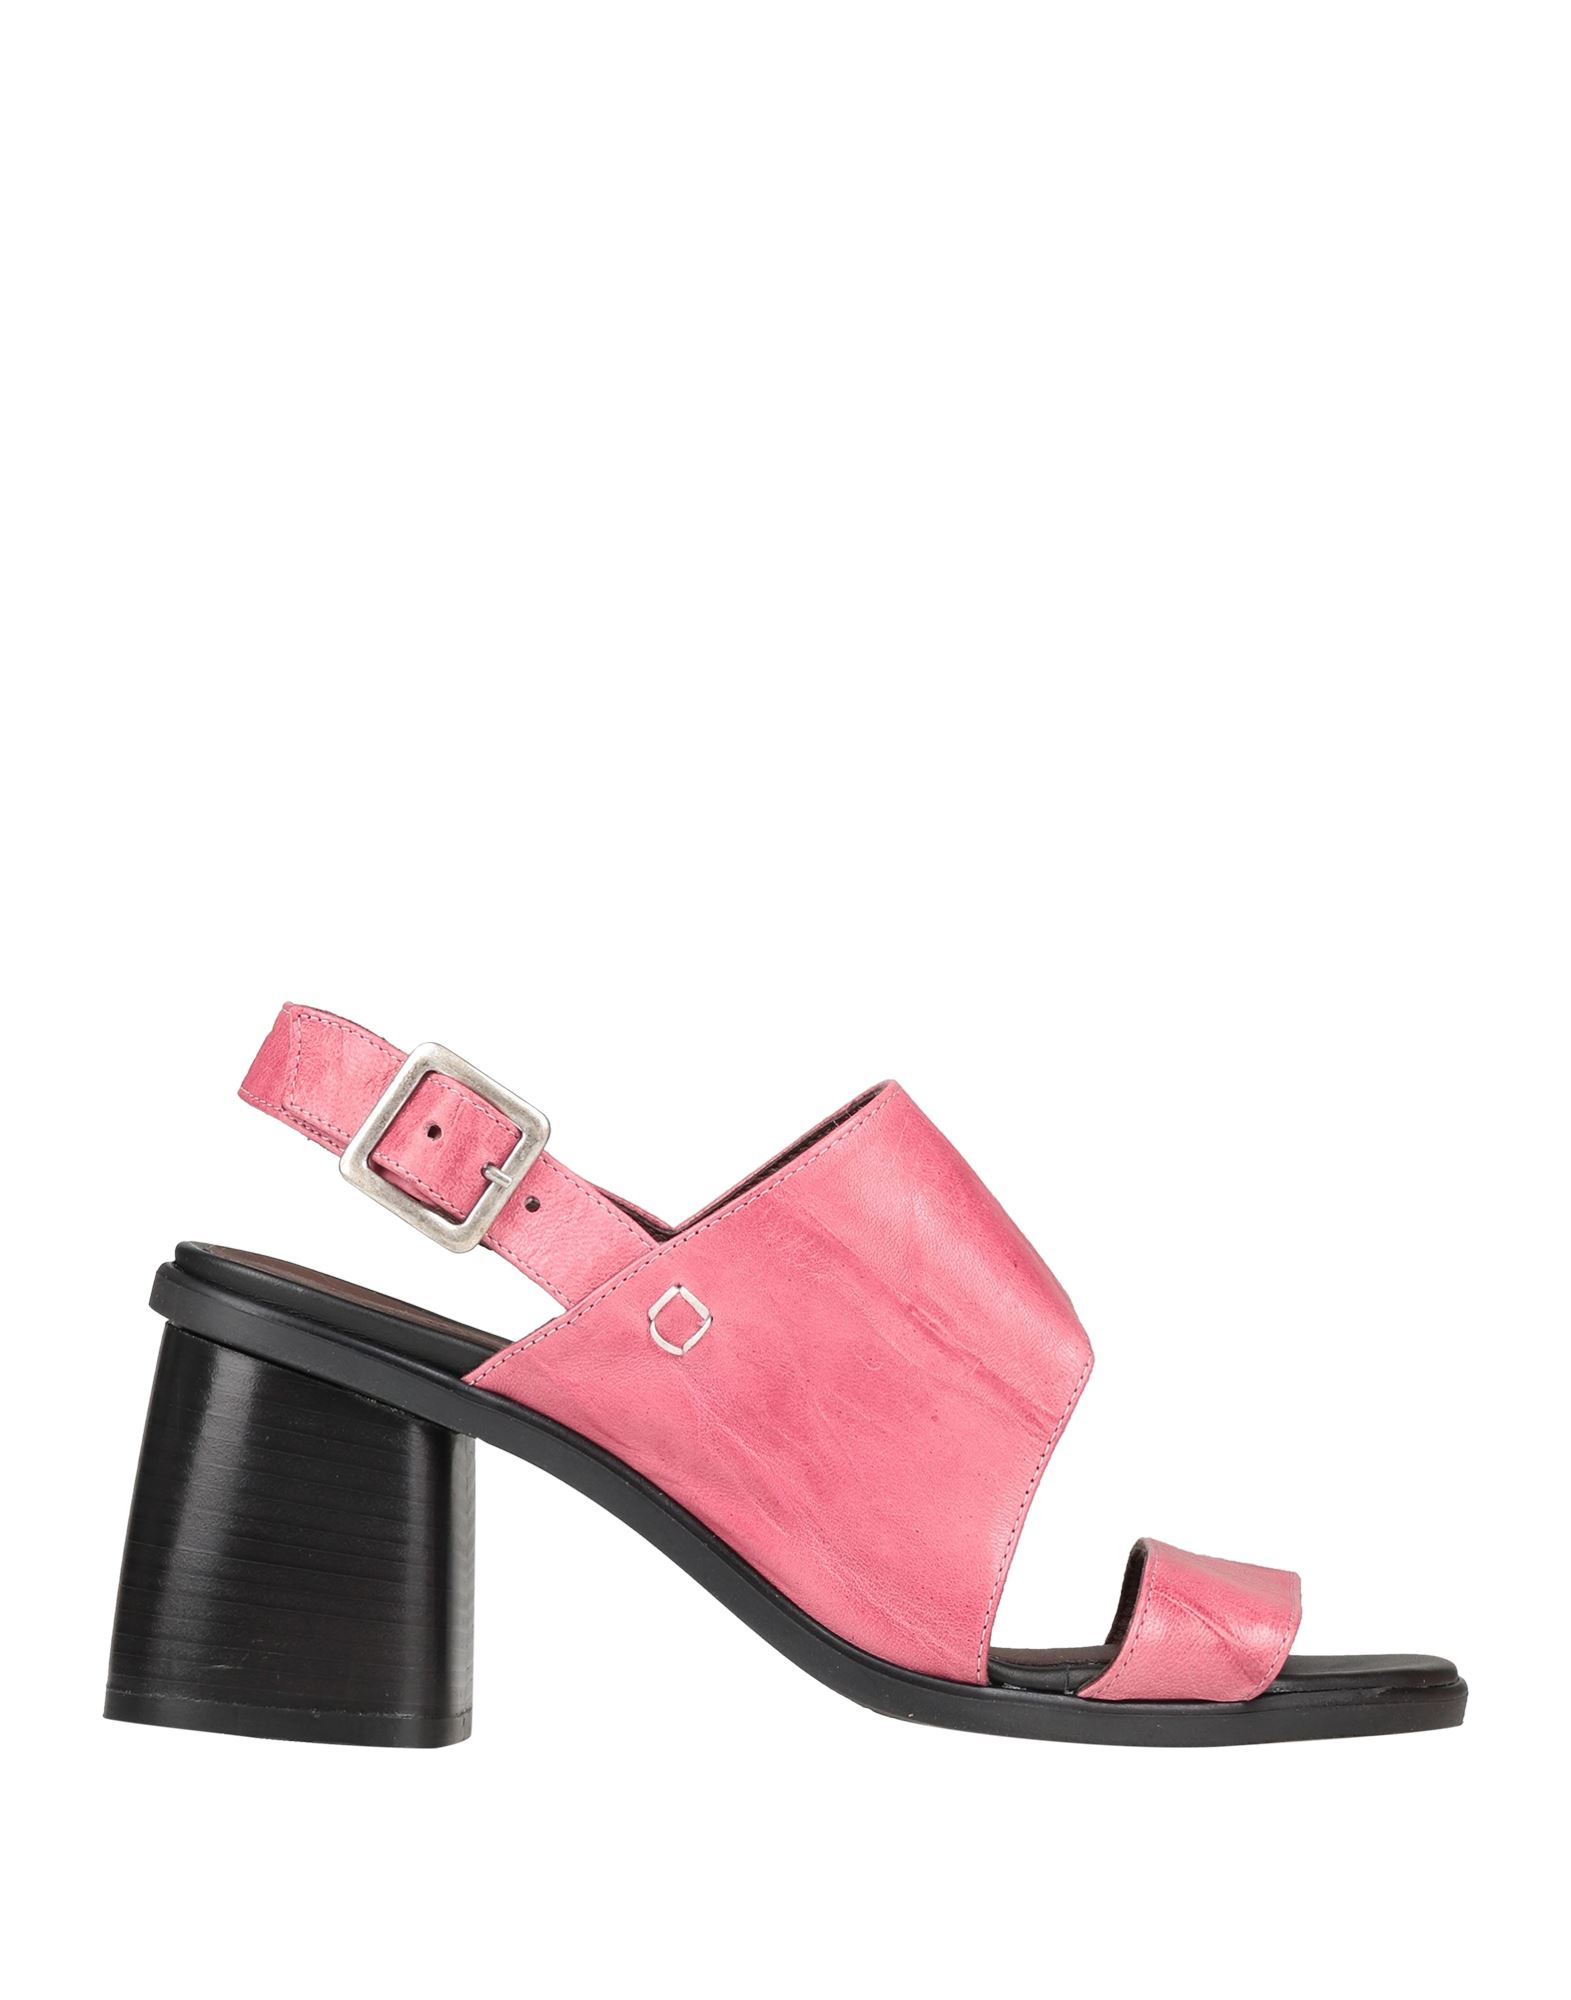 Collection Privèe Collection Privēe? Woman Sandals Pastel Pink Size 7 Soft Leather